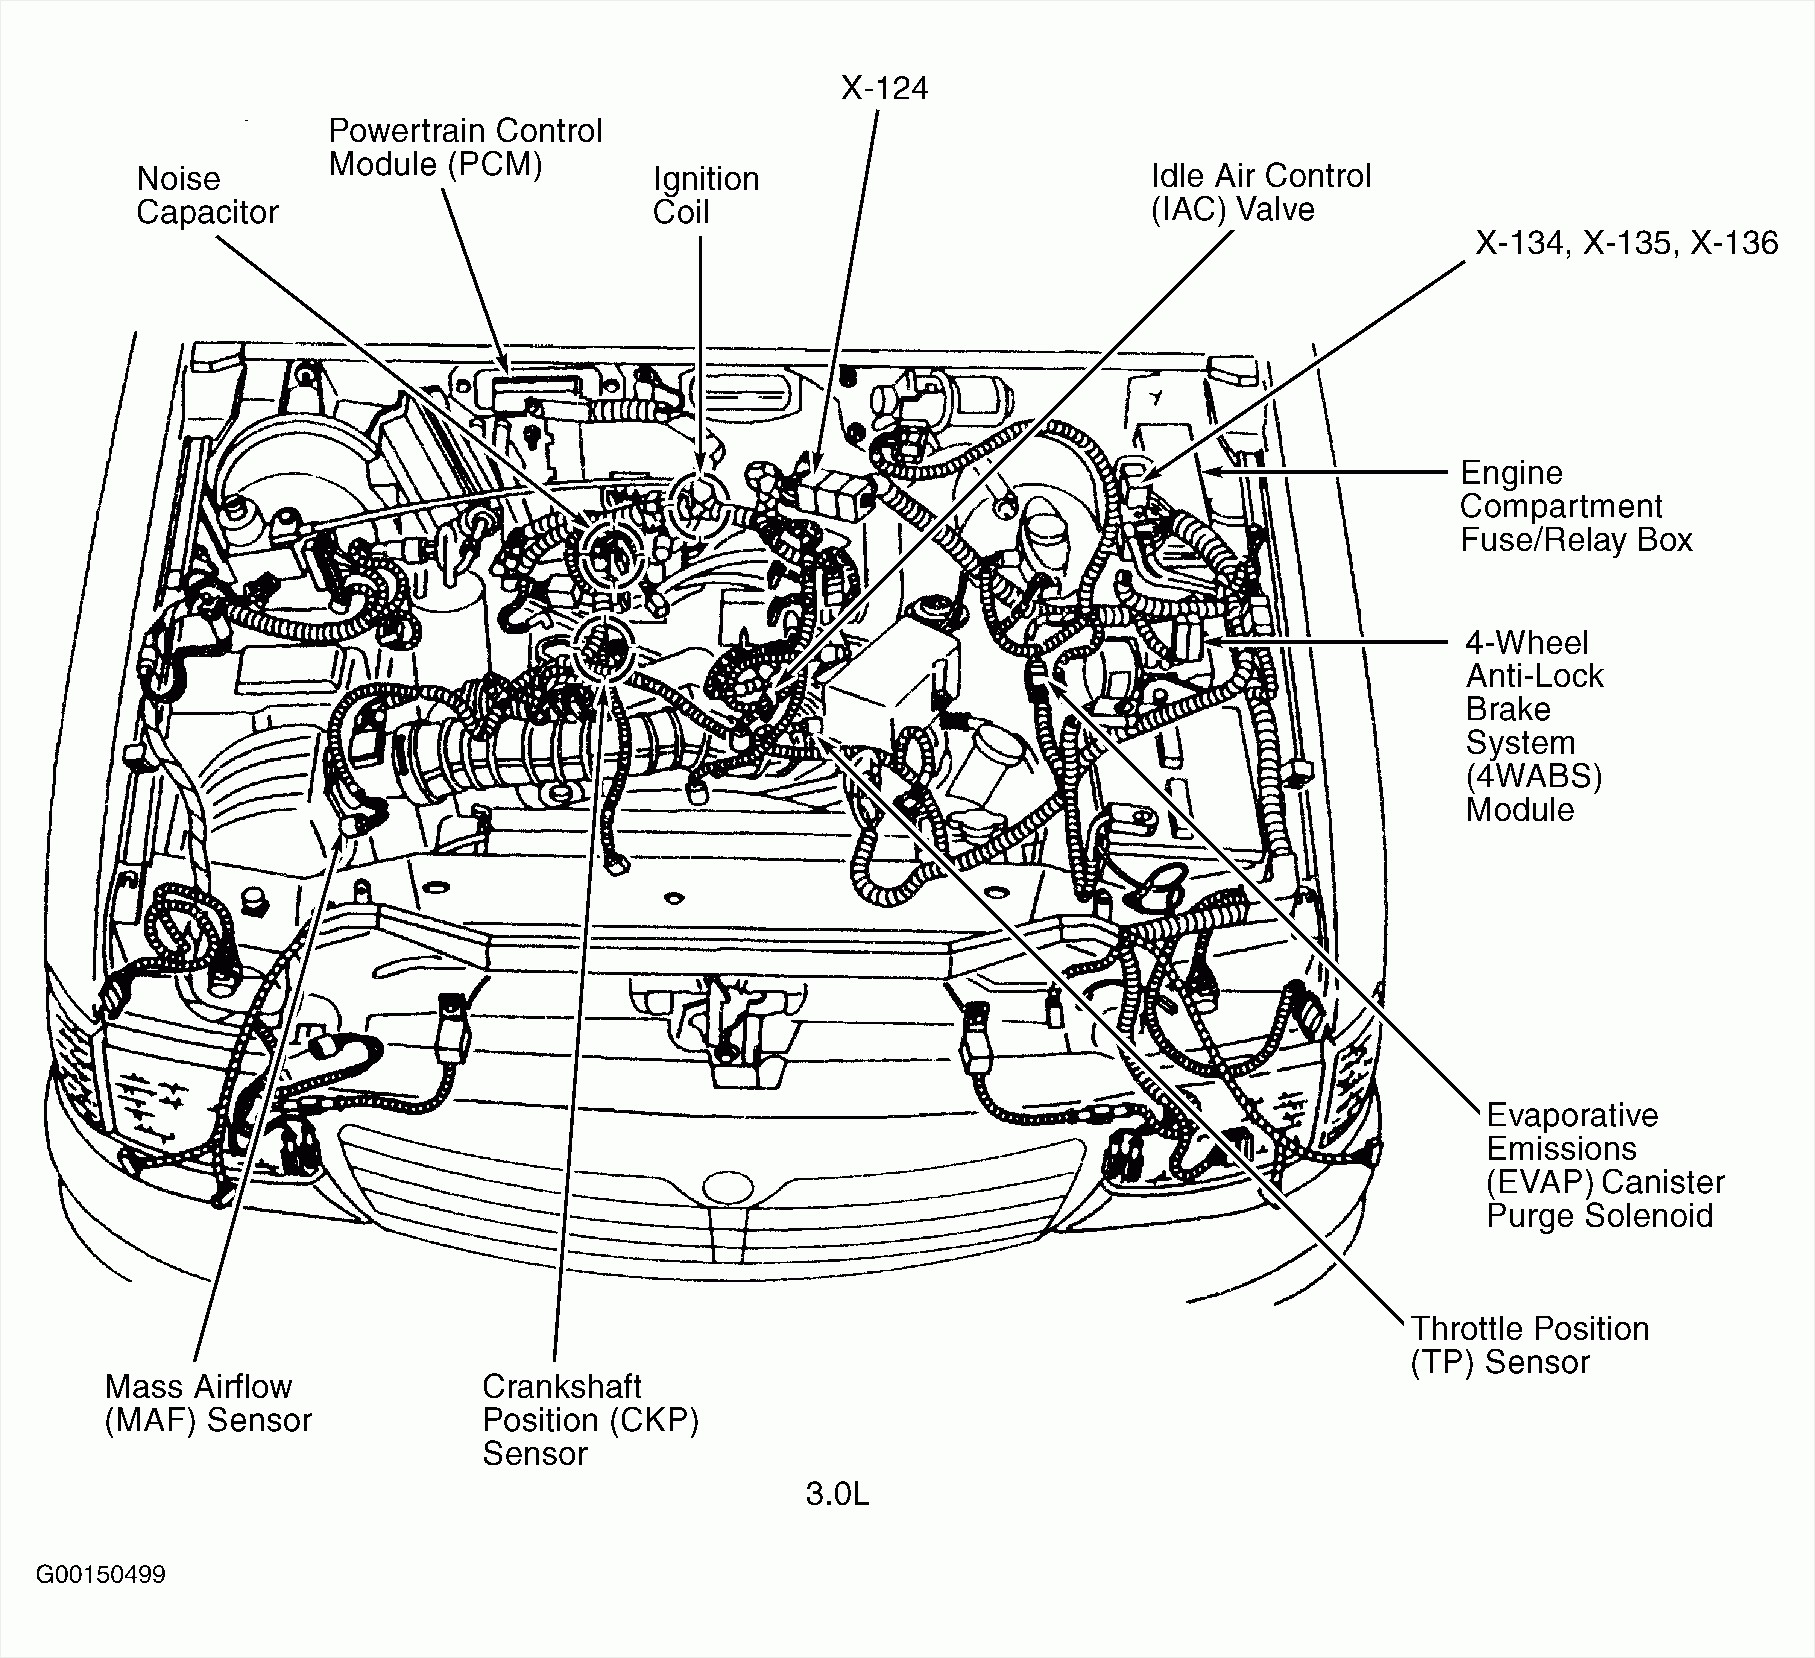 2000 ford F150 V6 Engine Diagram 2004 Mazda 6 V6 Engine Diagram Wiring Diagrams Of 2000 ford F150 V6 Engine Diagram